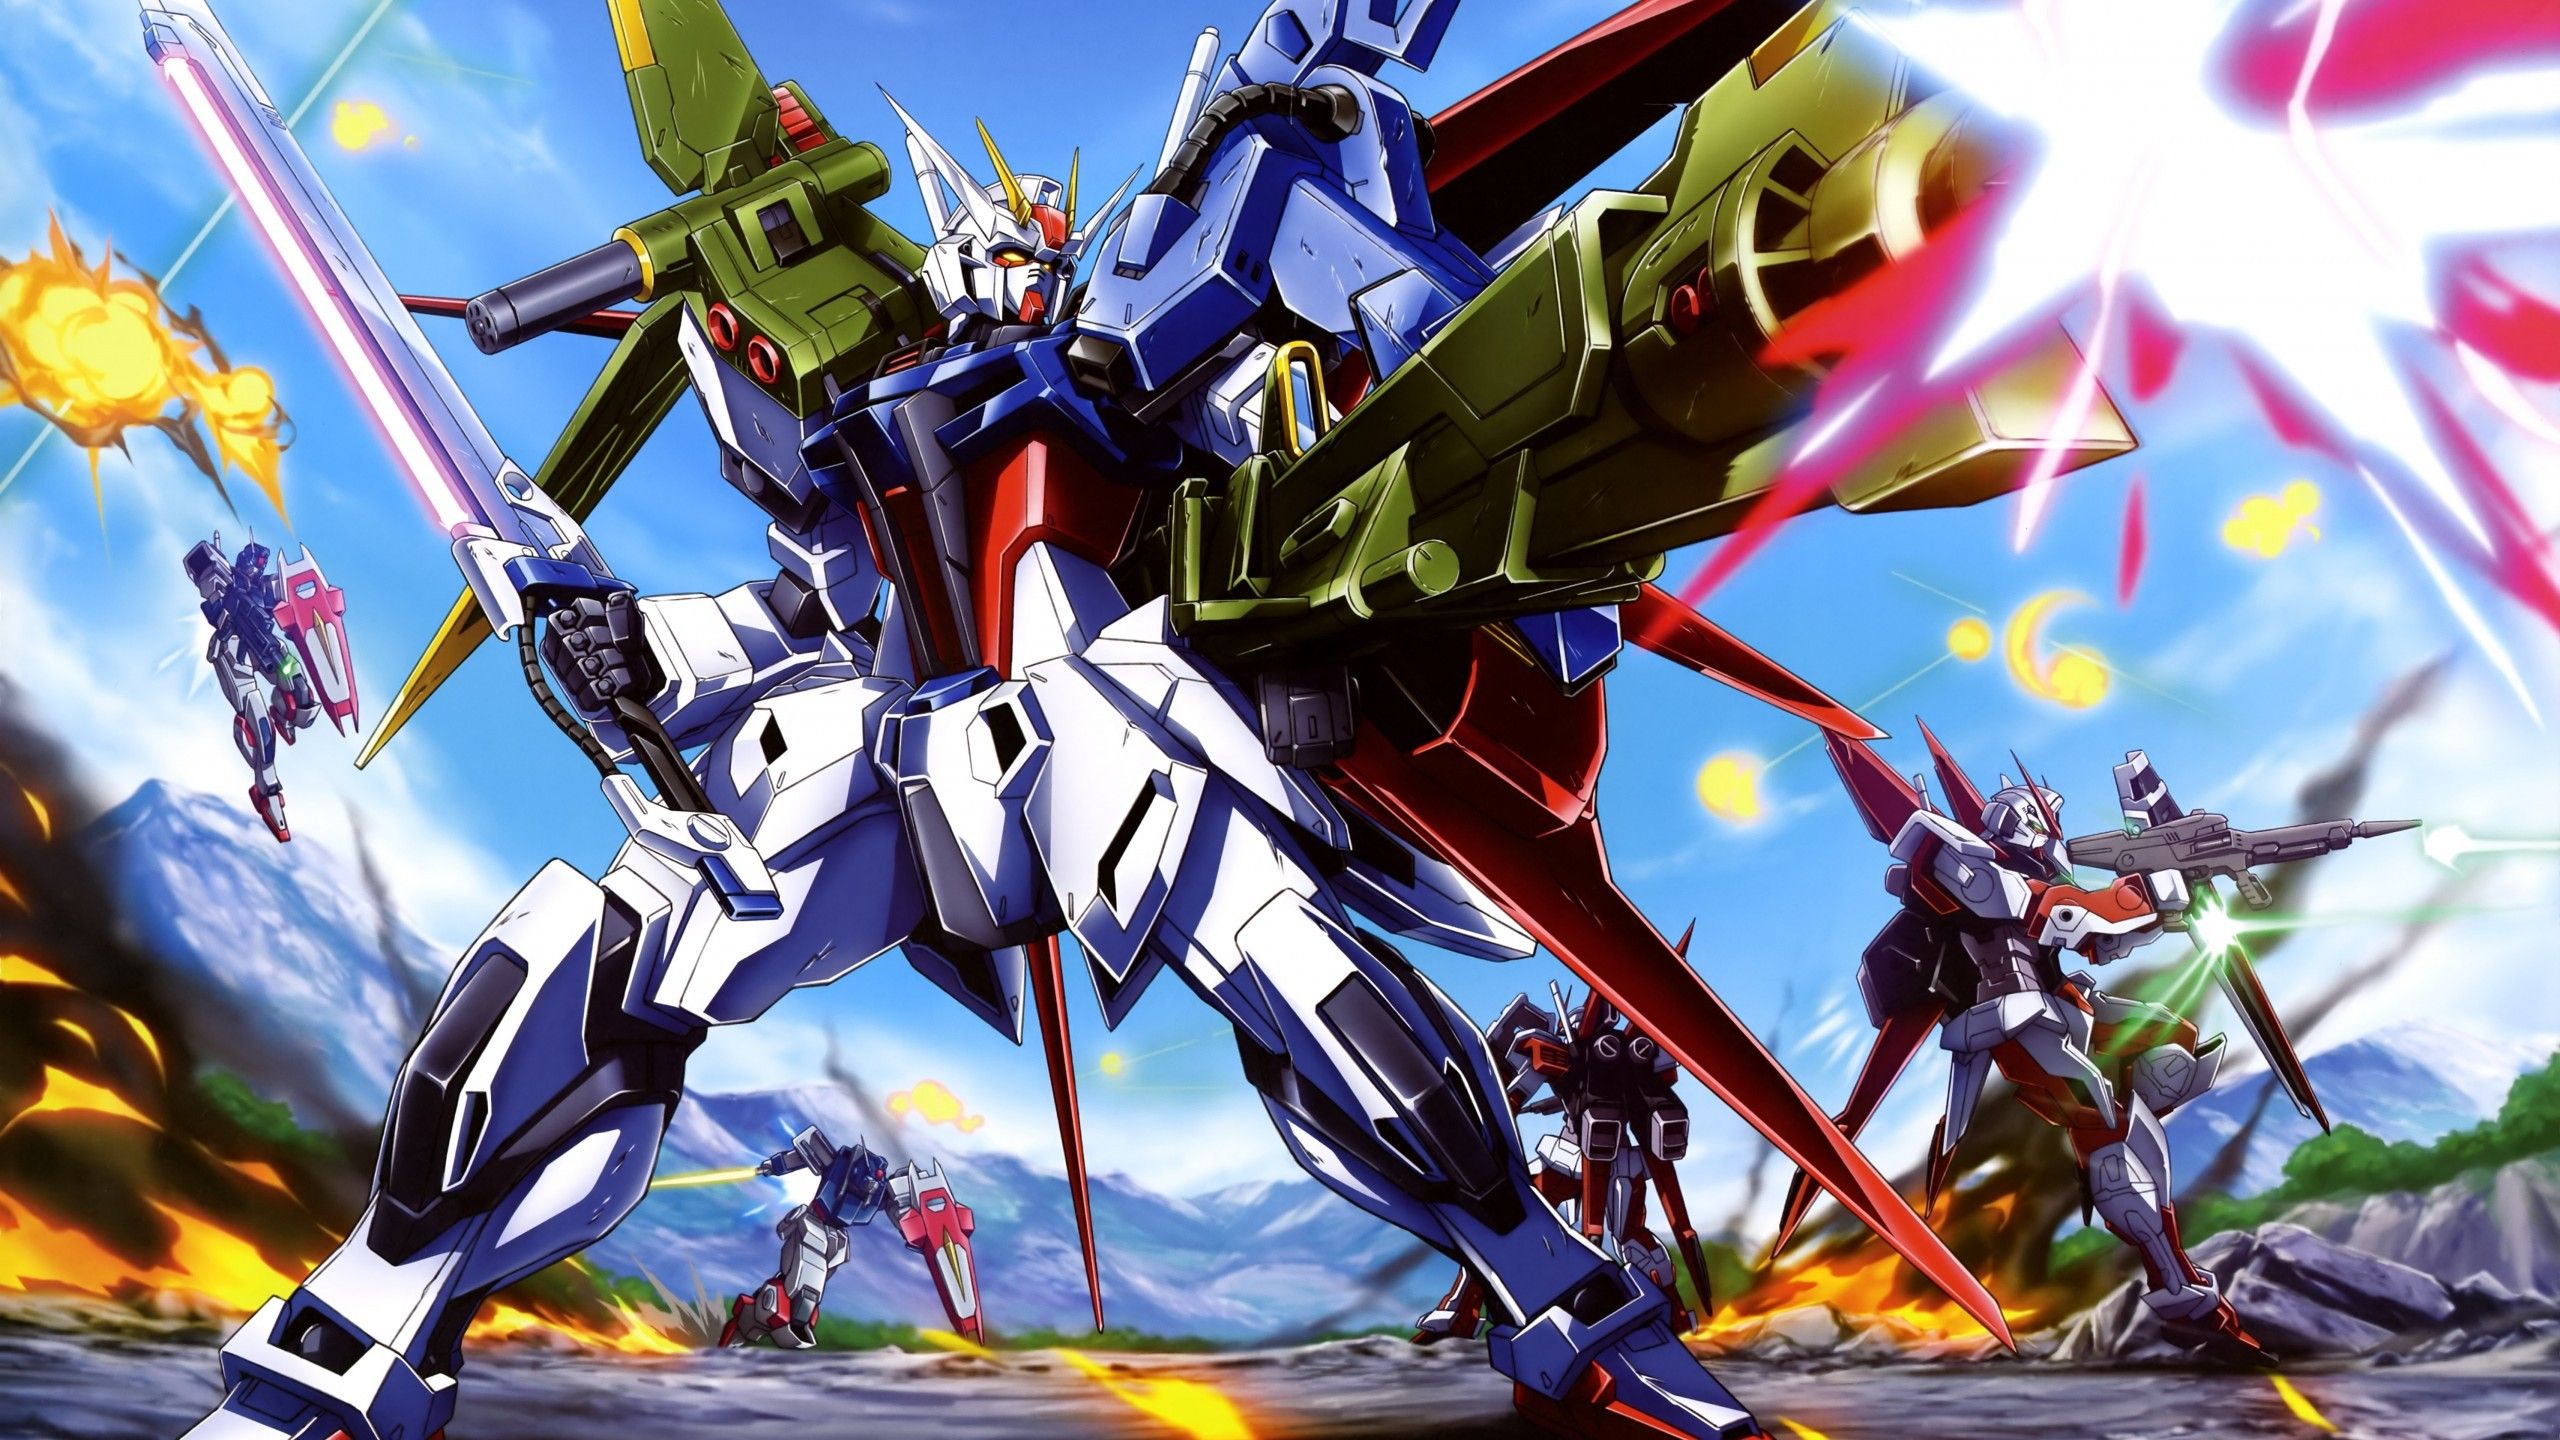 Download 2560x1440 Mobile Suit Gundam Seed, Robots, Mecha Anime